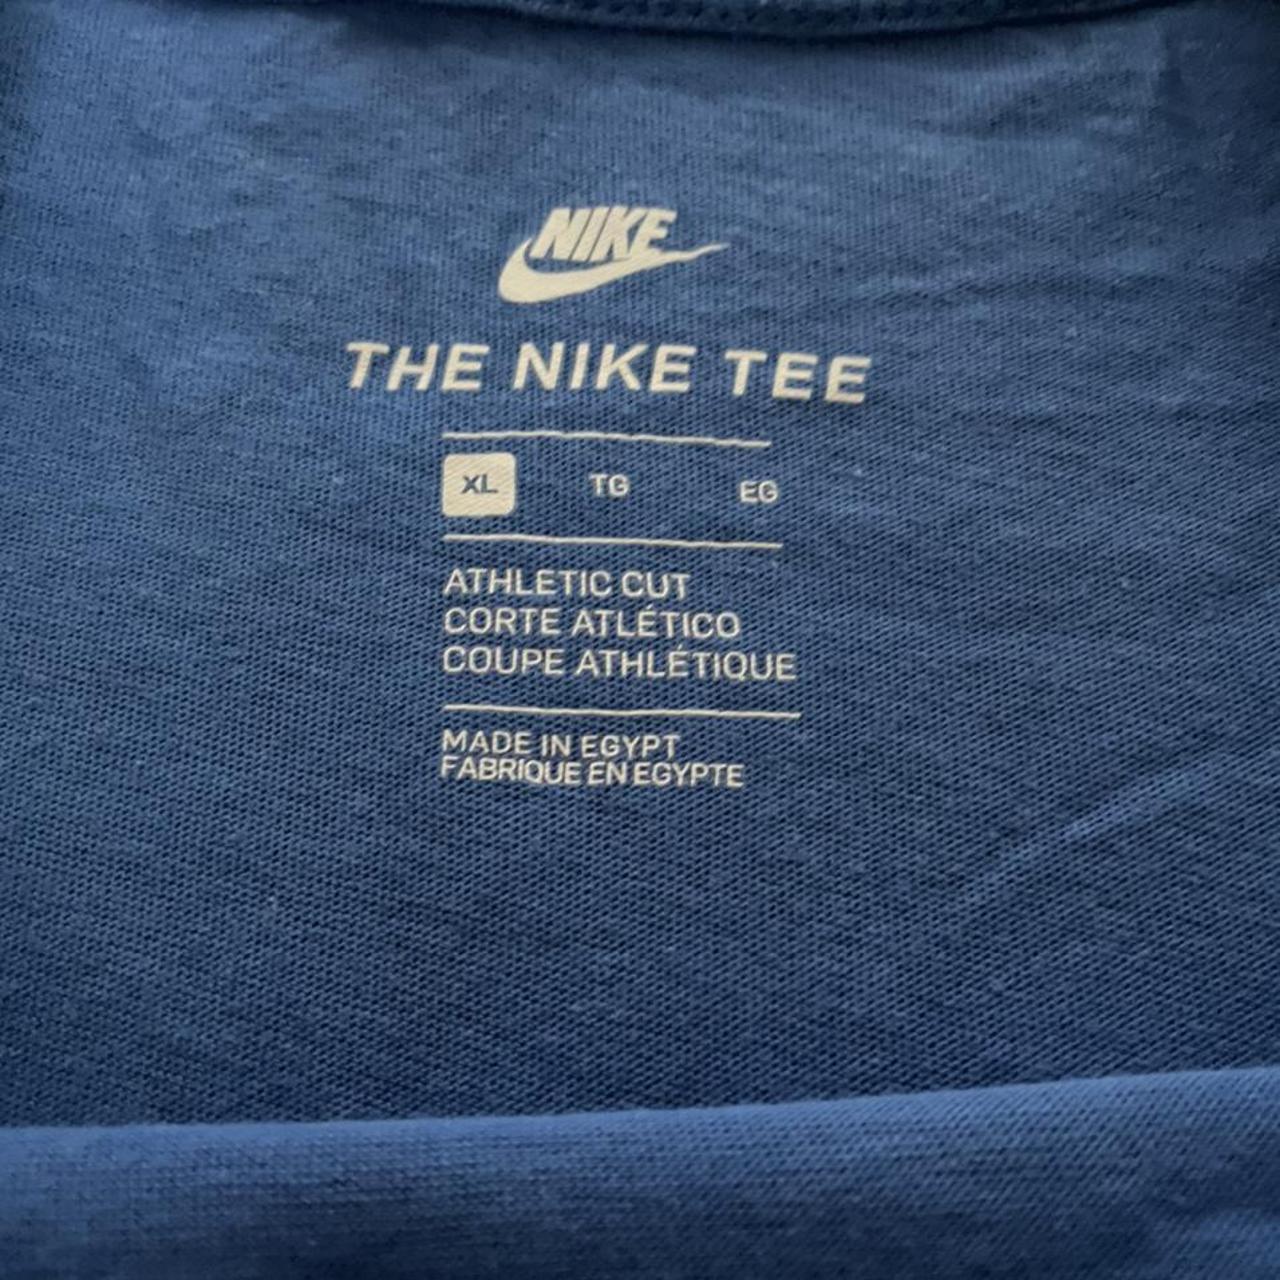 Product Image 2 - Plain Nike logo T-shirt 
No